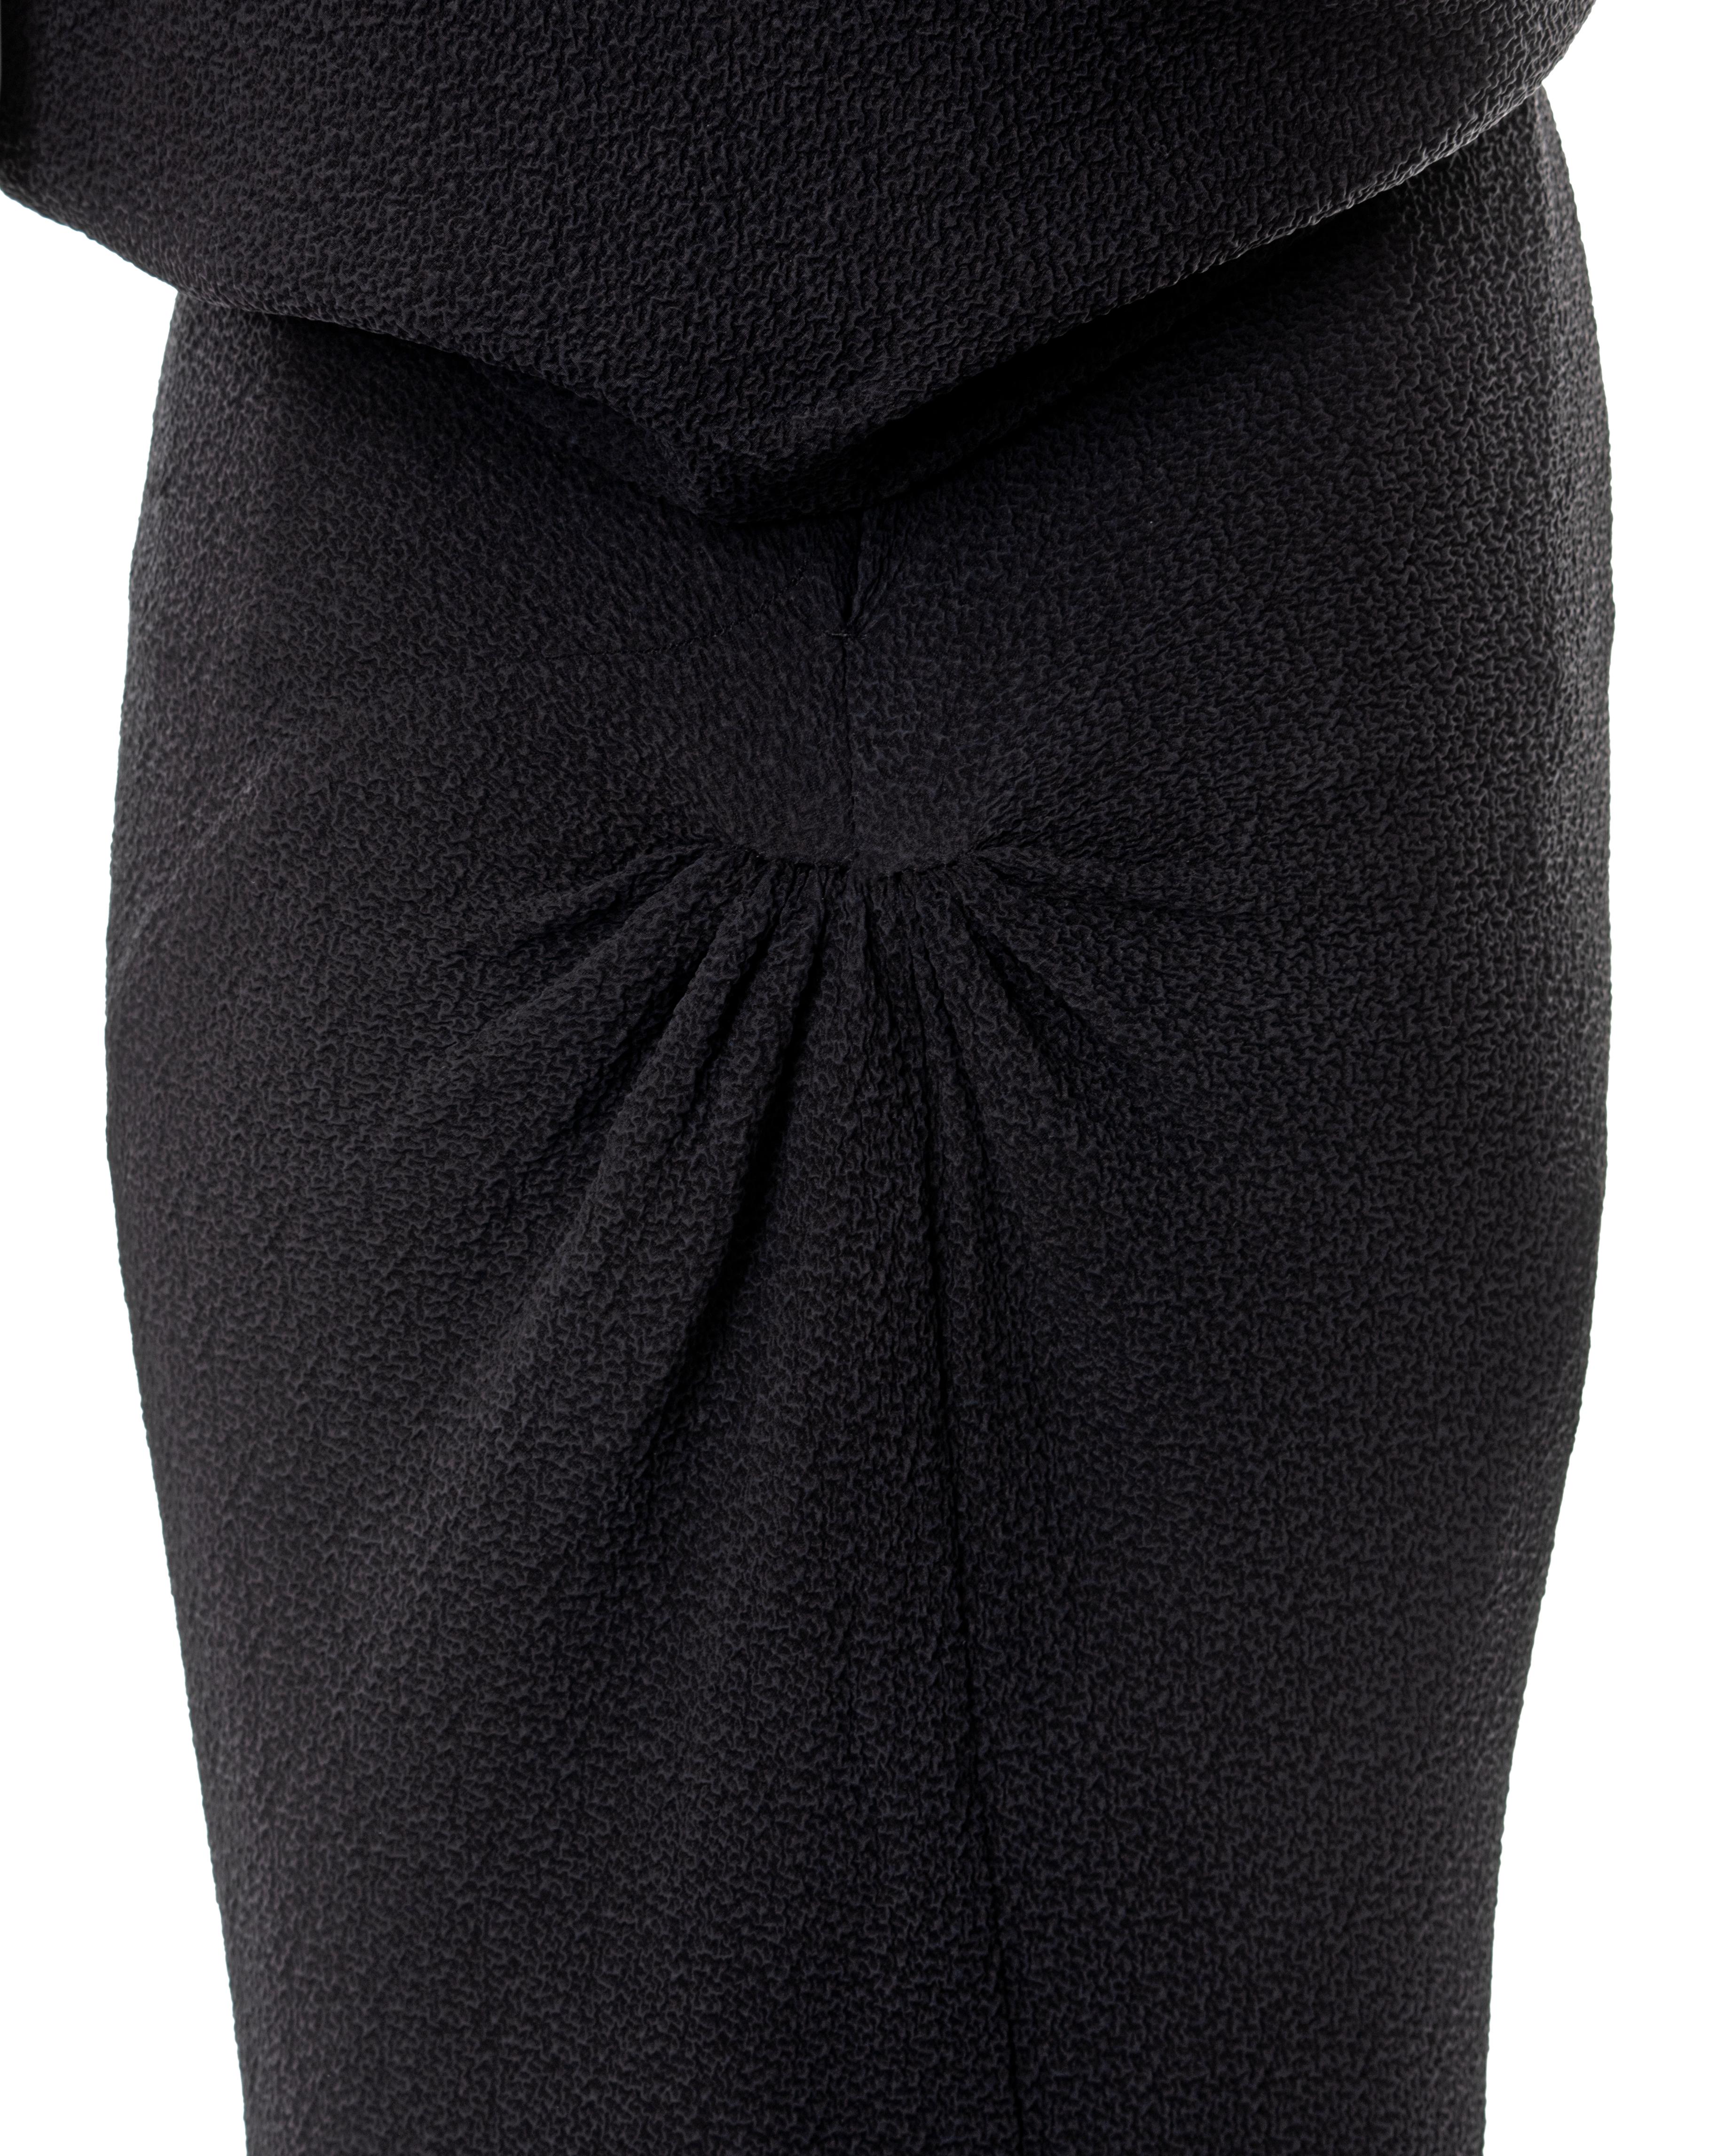 Balenciaga Haute Couture black silk crêpe evening dress with train, fw 1960 For Sale 5